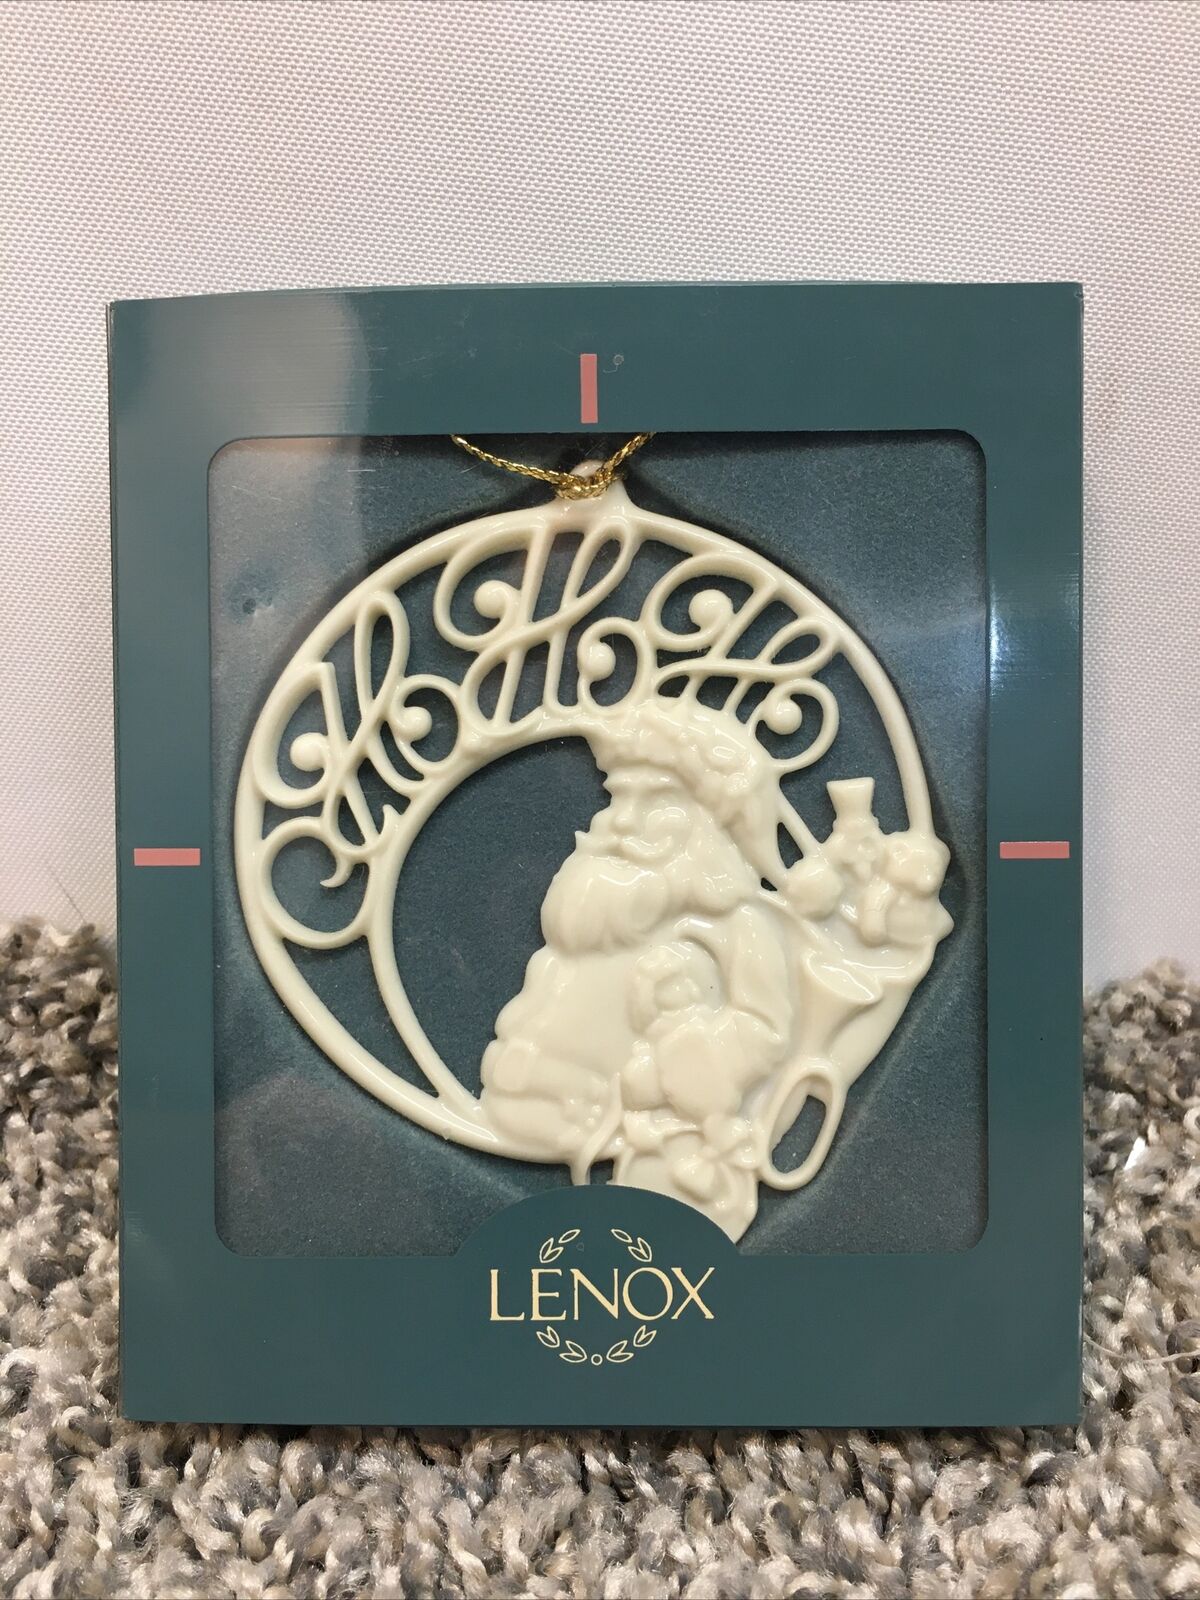 LENOX Holiday Wishes “Ho Ho Ho” Santa Claus Porcelain Christmas Ornament in Box